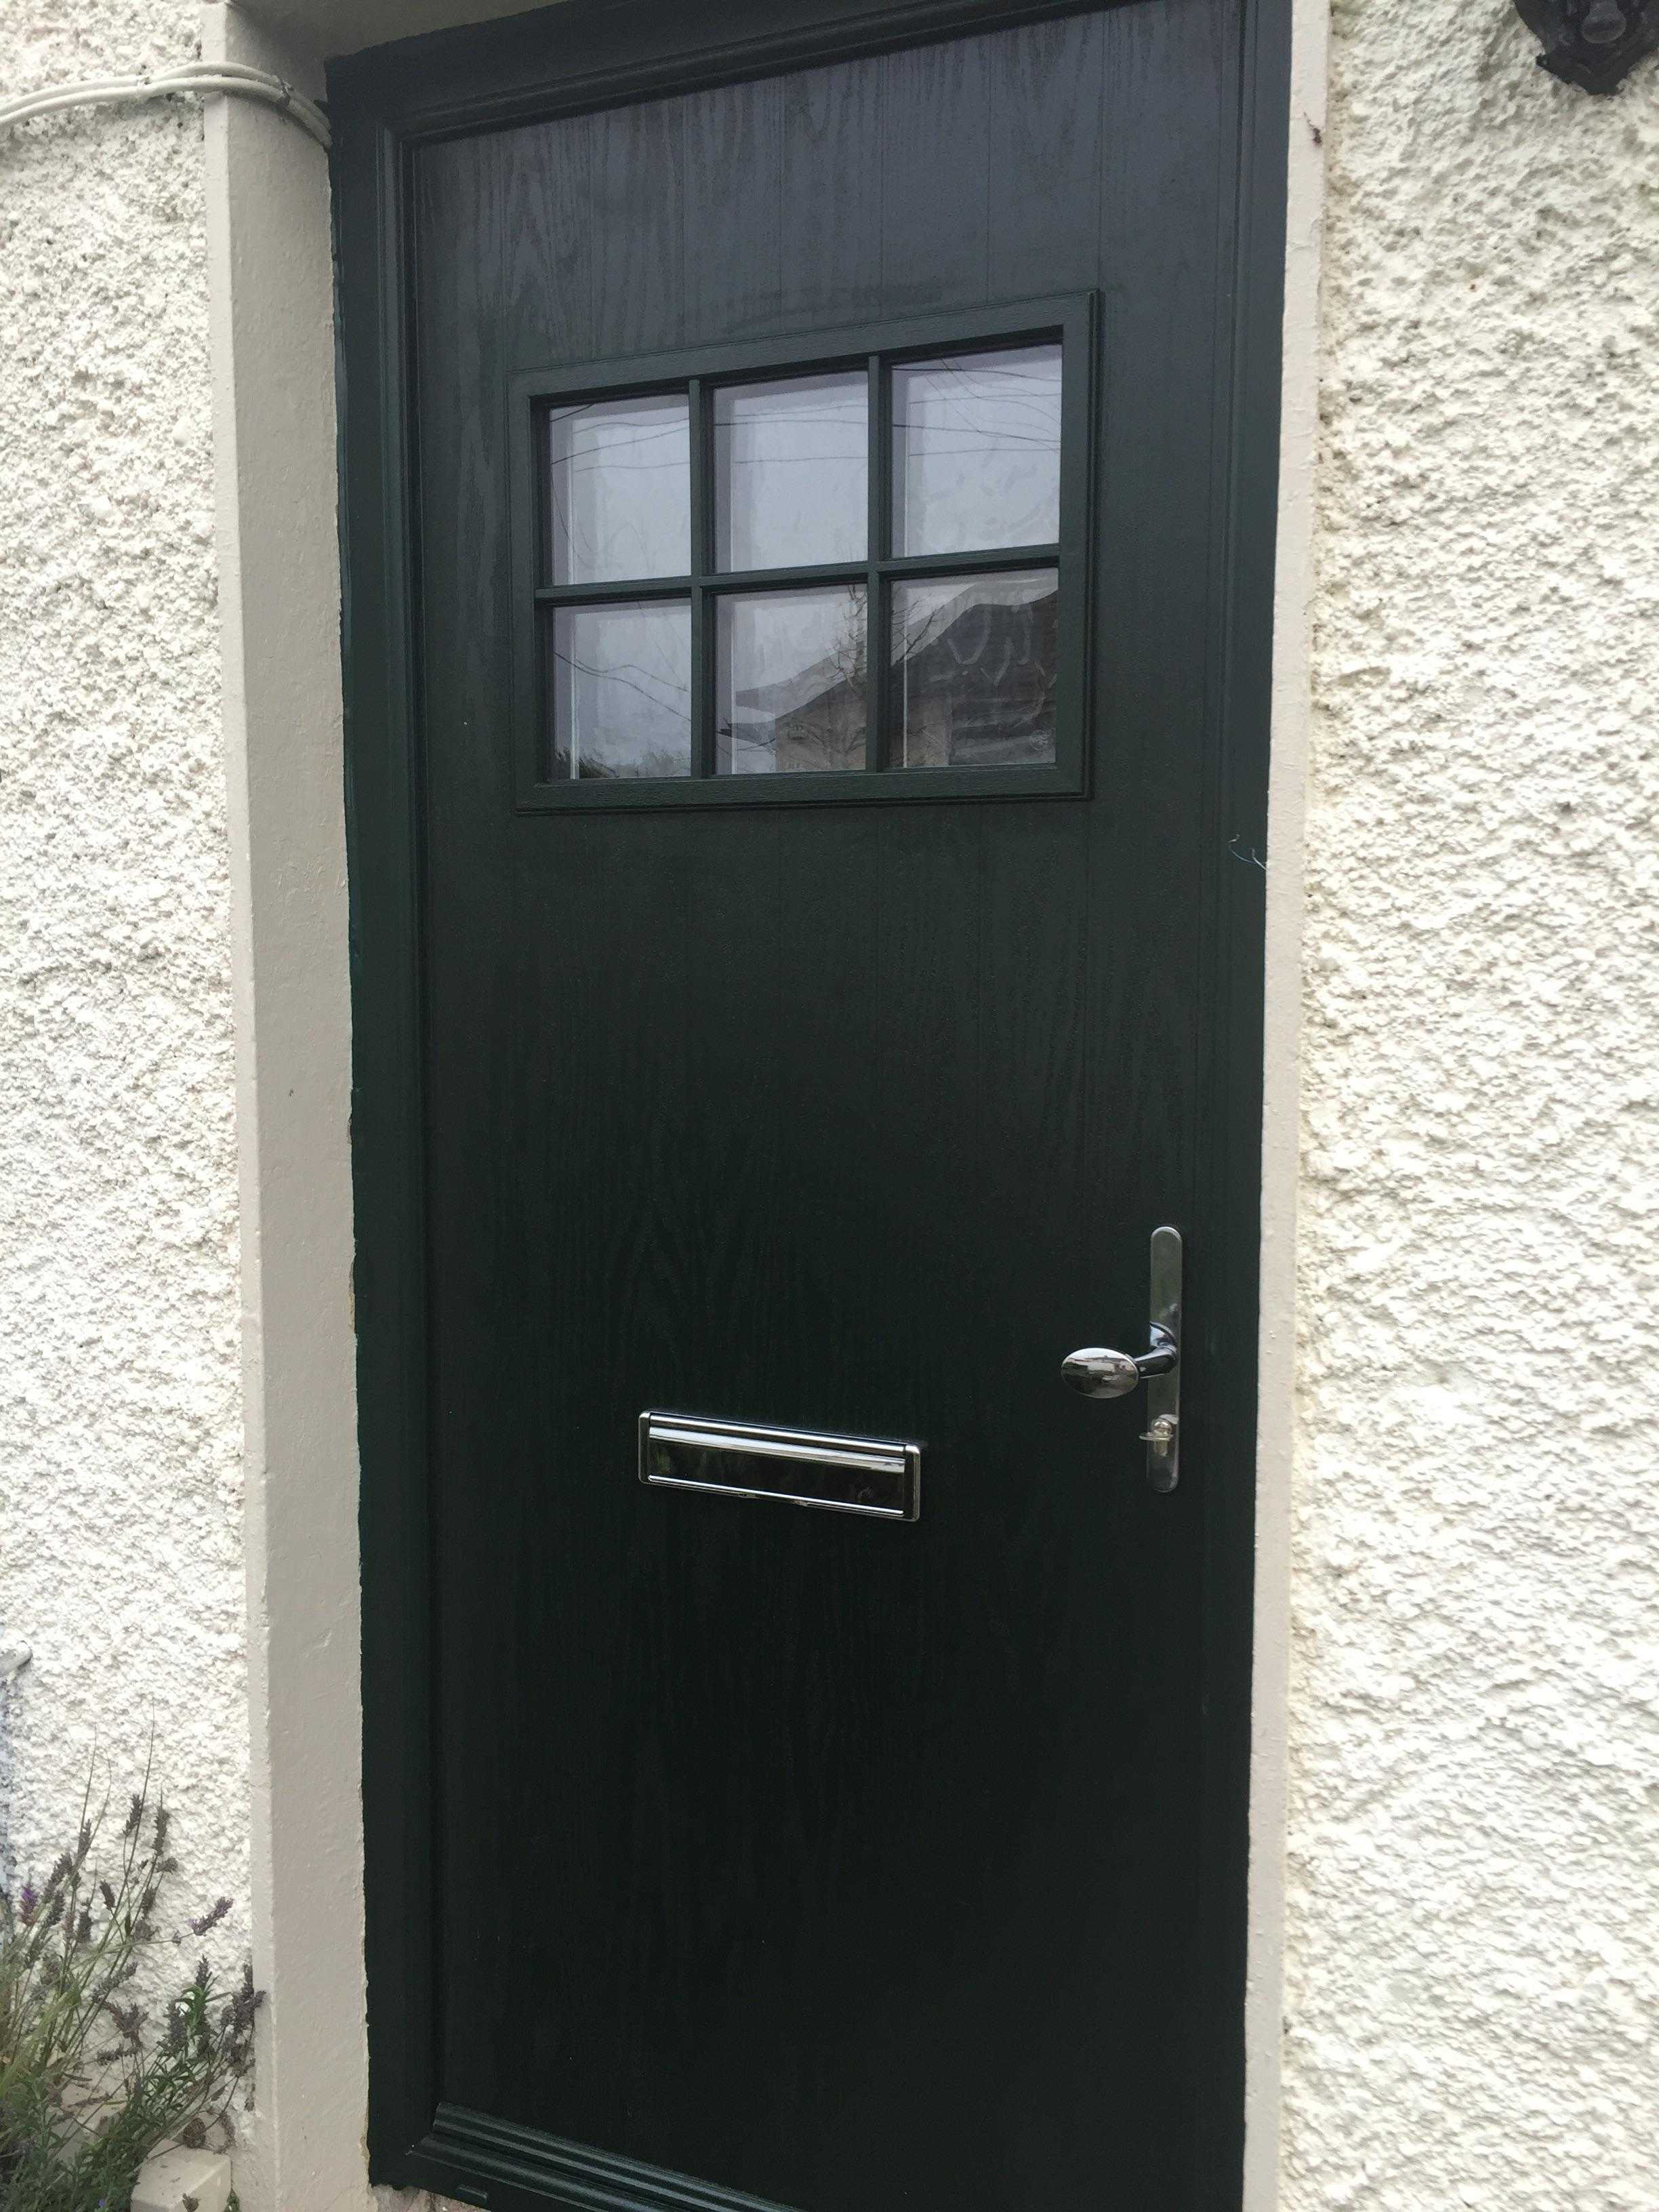 DARK GREEN APEER COMPOSITE DOOR FITTED BY ASGARD WINDOWS IN DUBLIN.